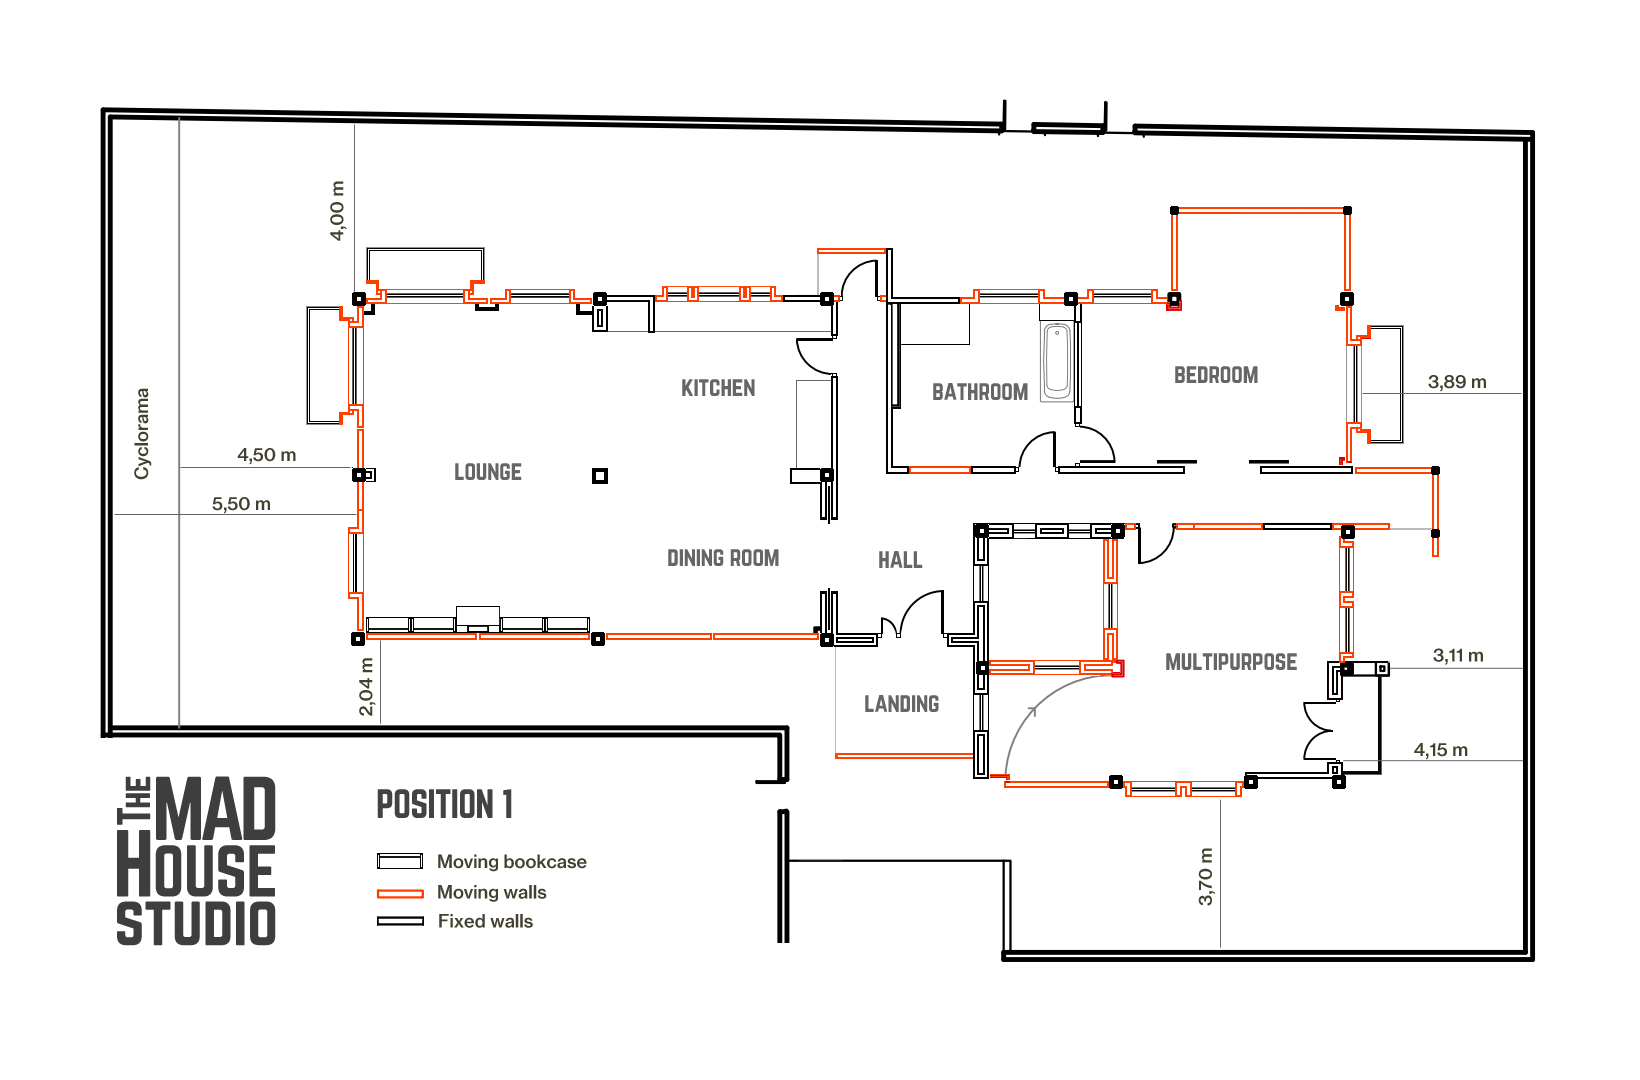 Position 1 floor plan